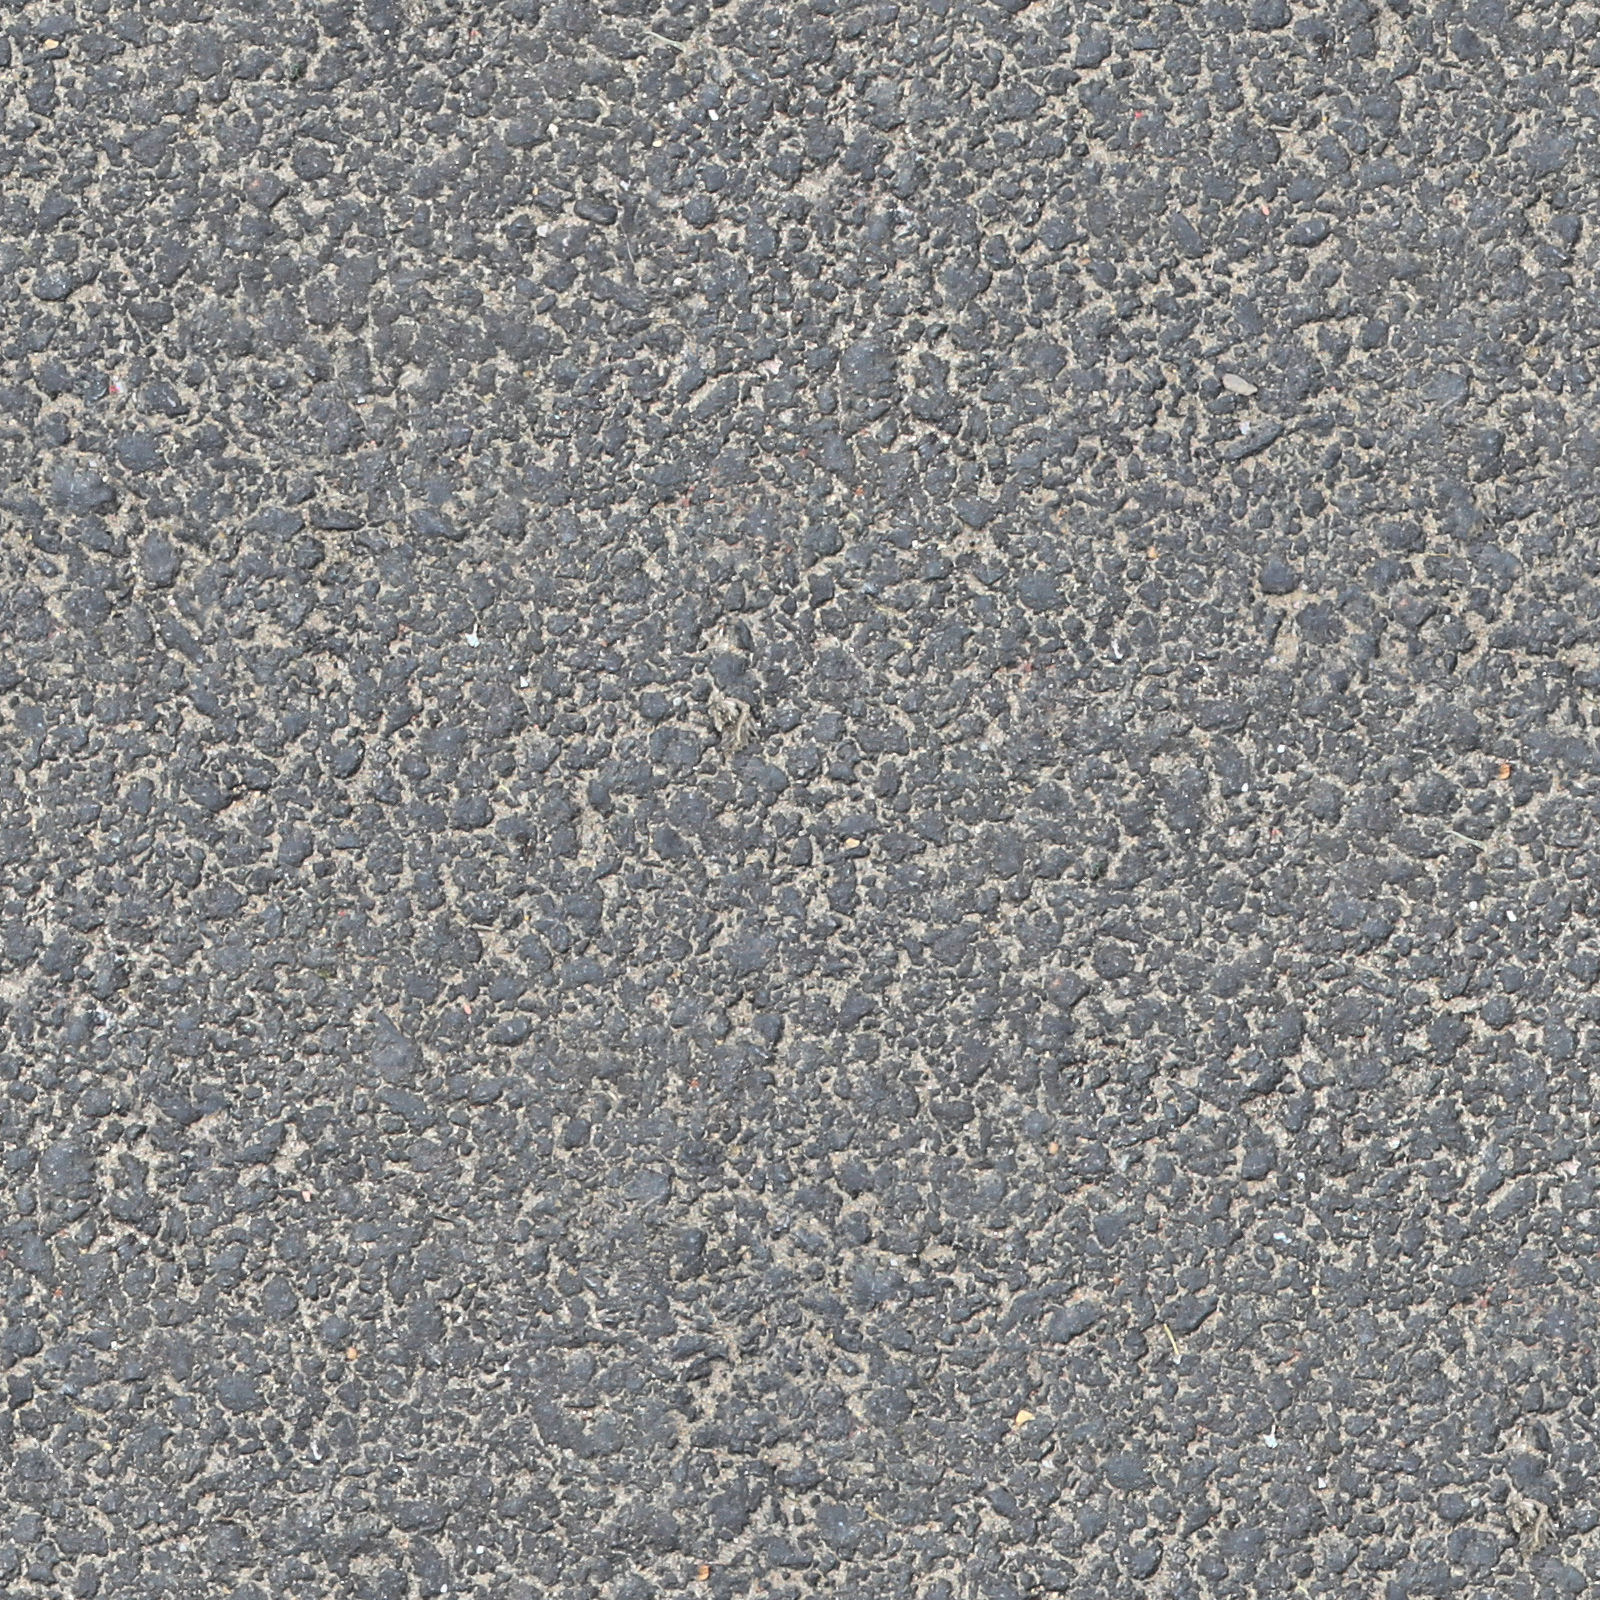 High Resolution Seamless Textures: Seamless dirty road asphalt ...